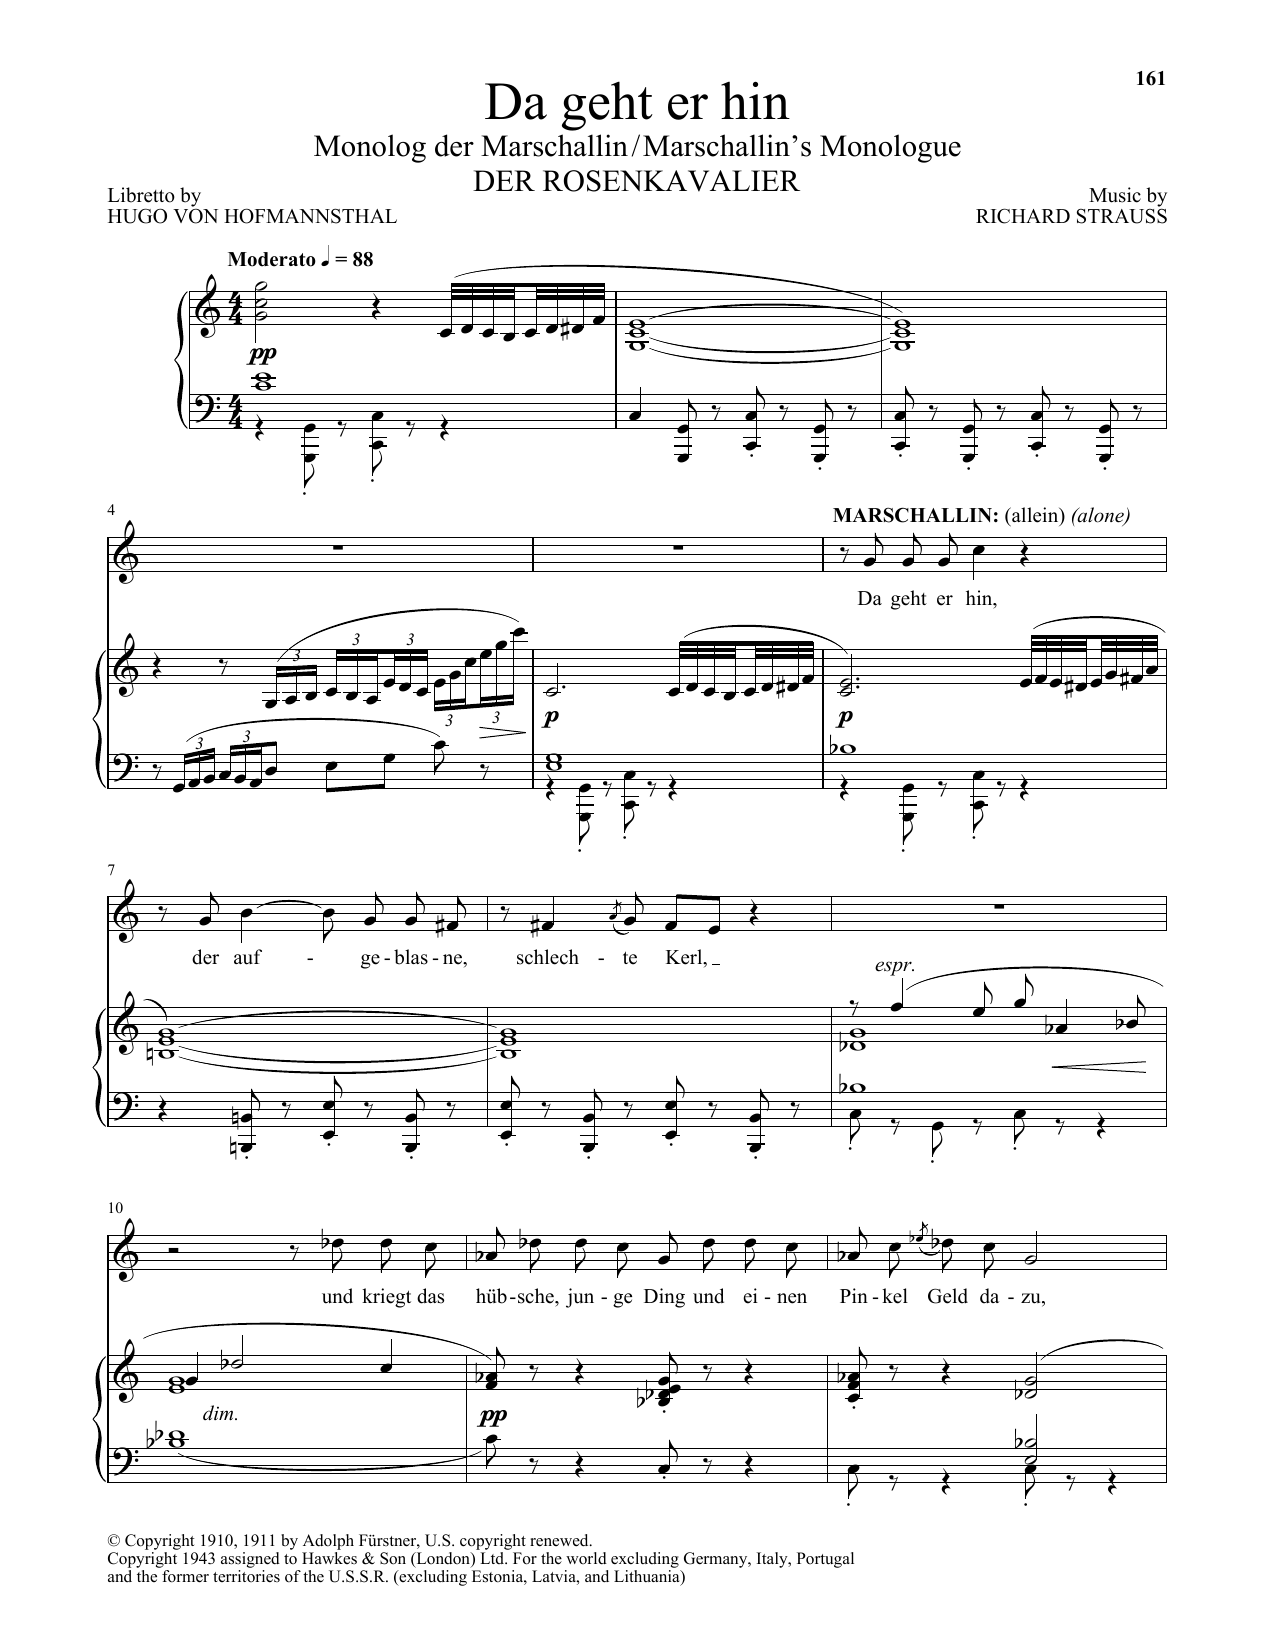 Richard Strauss Da Geht Er Hin (The Marschallin's Monologue) (from Der Rosenkavalier) Sheet Music Notes & Chords for Piano & Vocal - Download or Print PDF